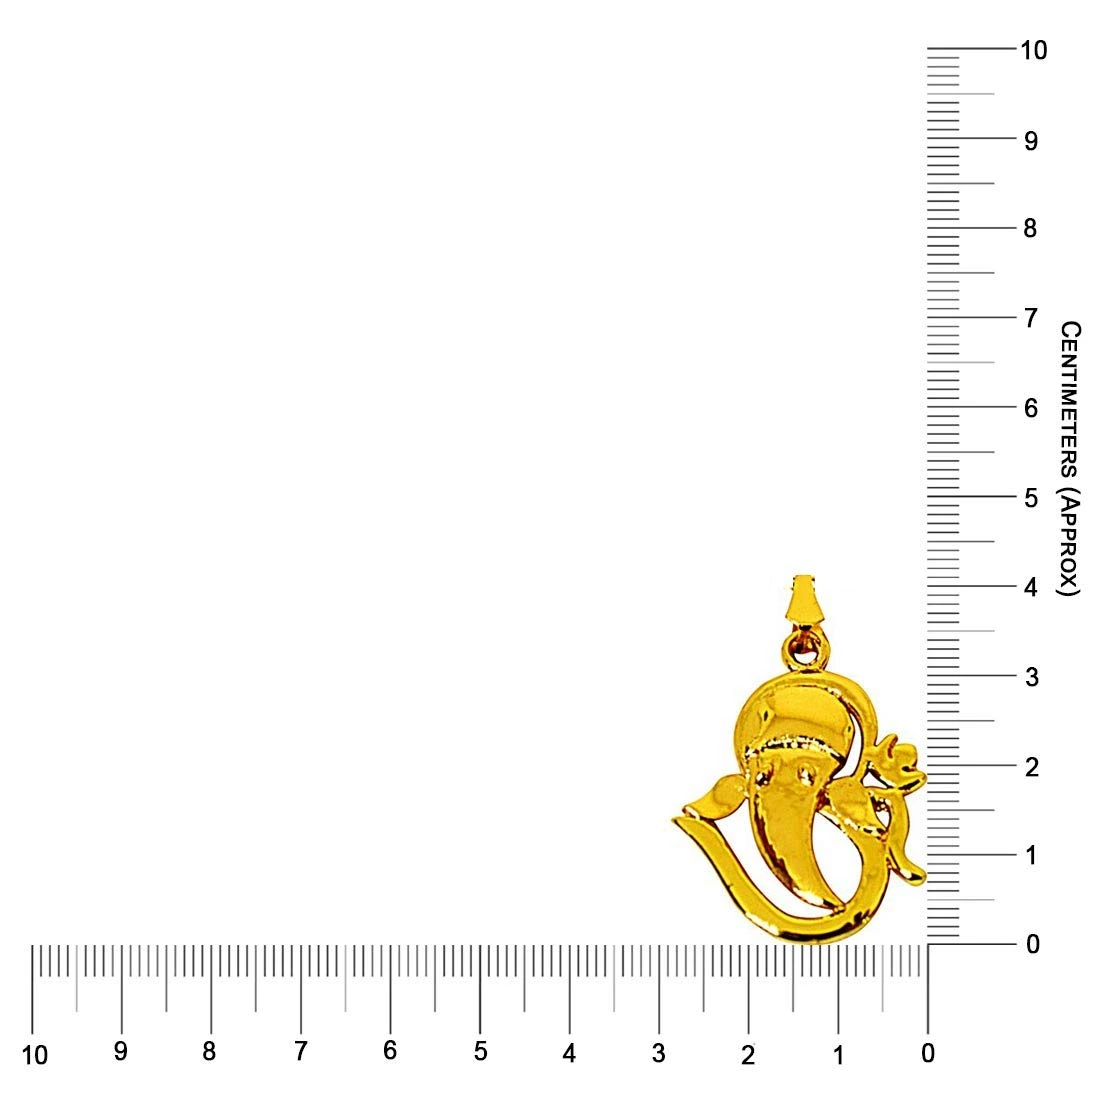 Om Ganeshaya Namah Gold Plated Religious Pendant with Chain (SDS269)